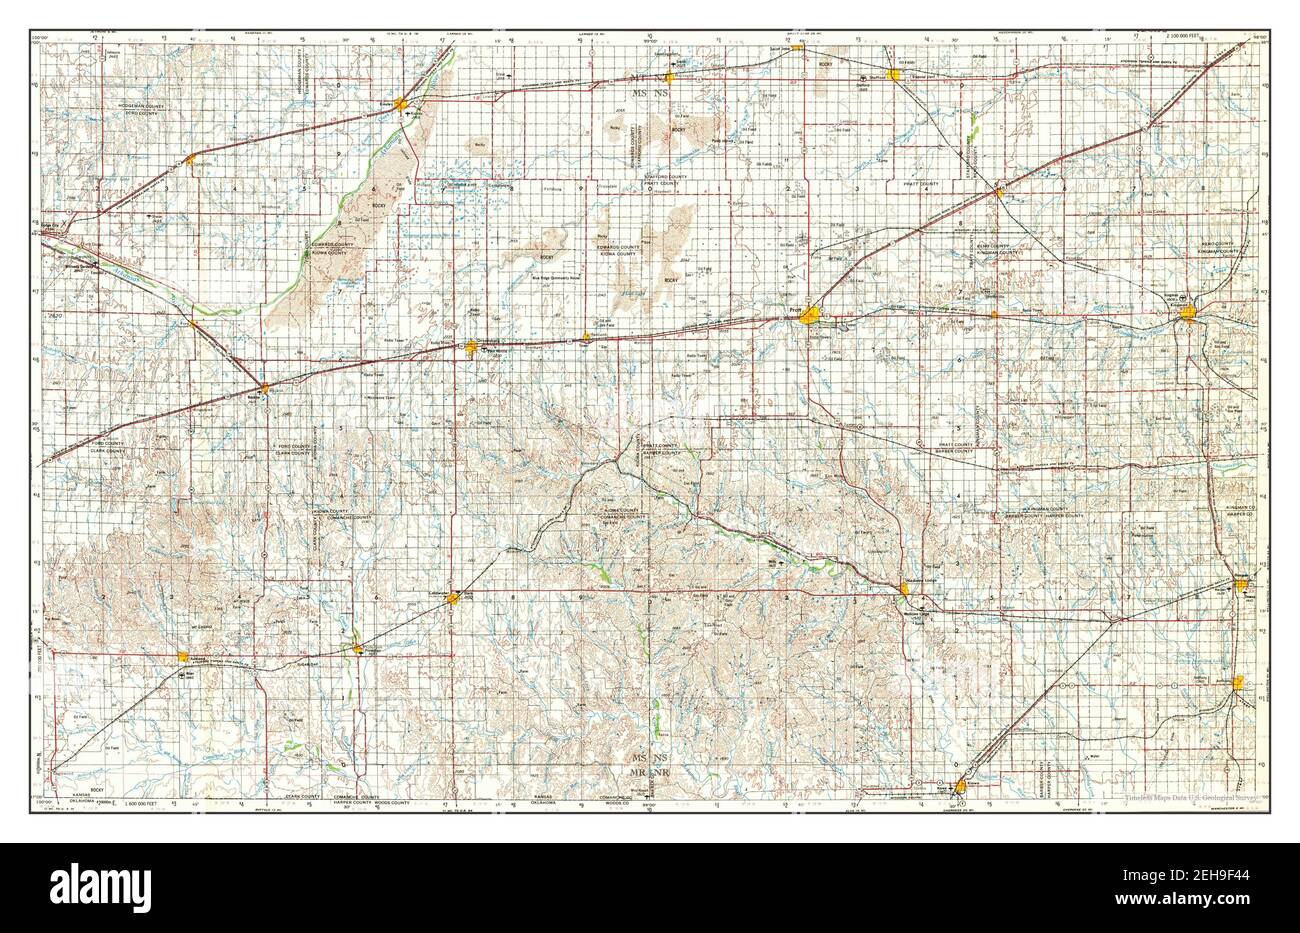 Pratt, Kansas, map 1955, 1:250000, United States of America by Timeless Maps, data U.S. Geological Survey Stock Photo